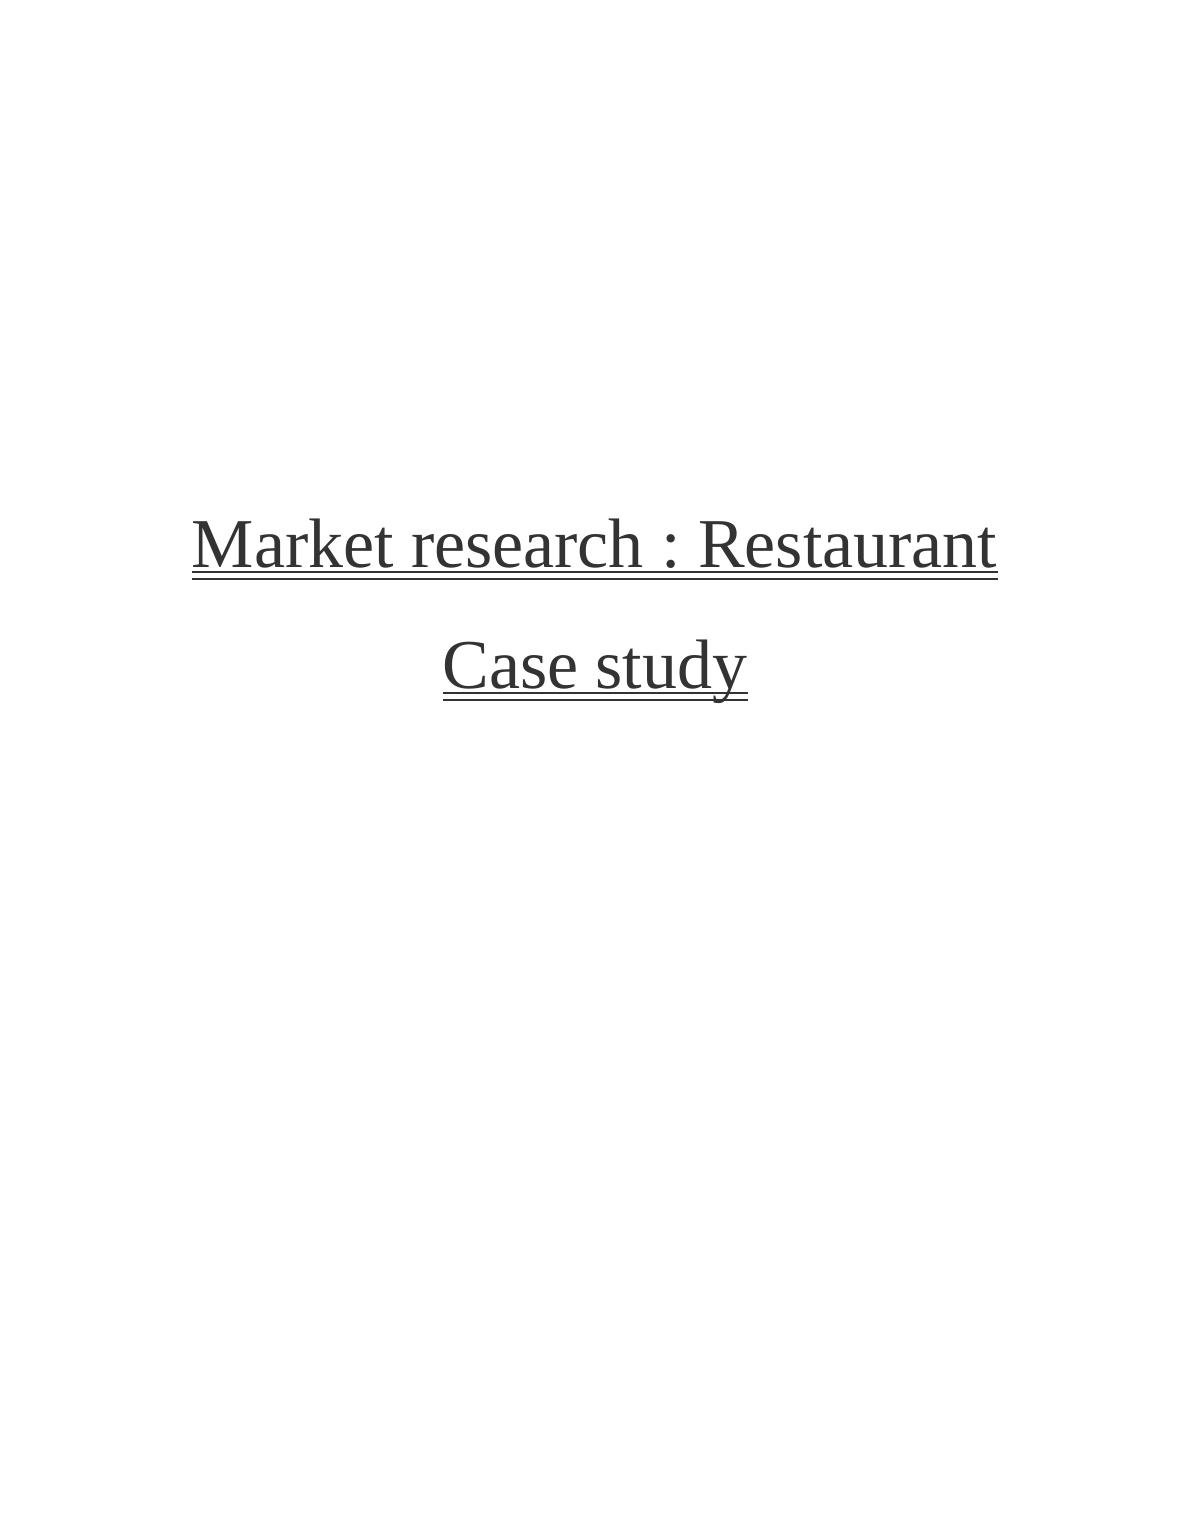 Market Research Essay : Qbic Hotel_1